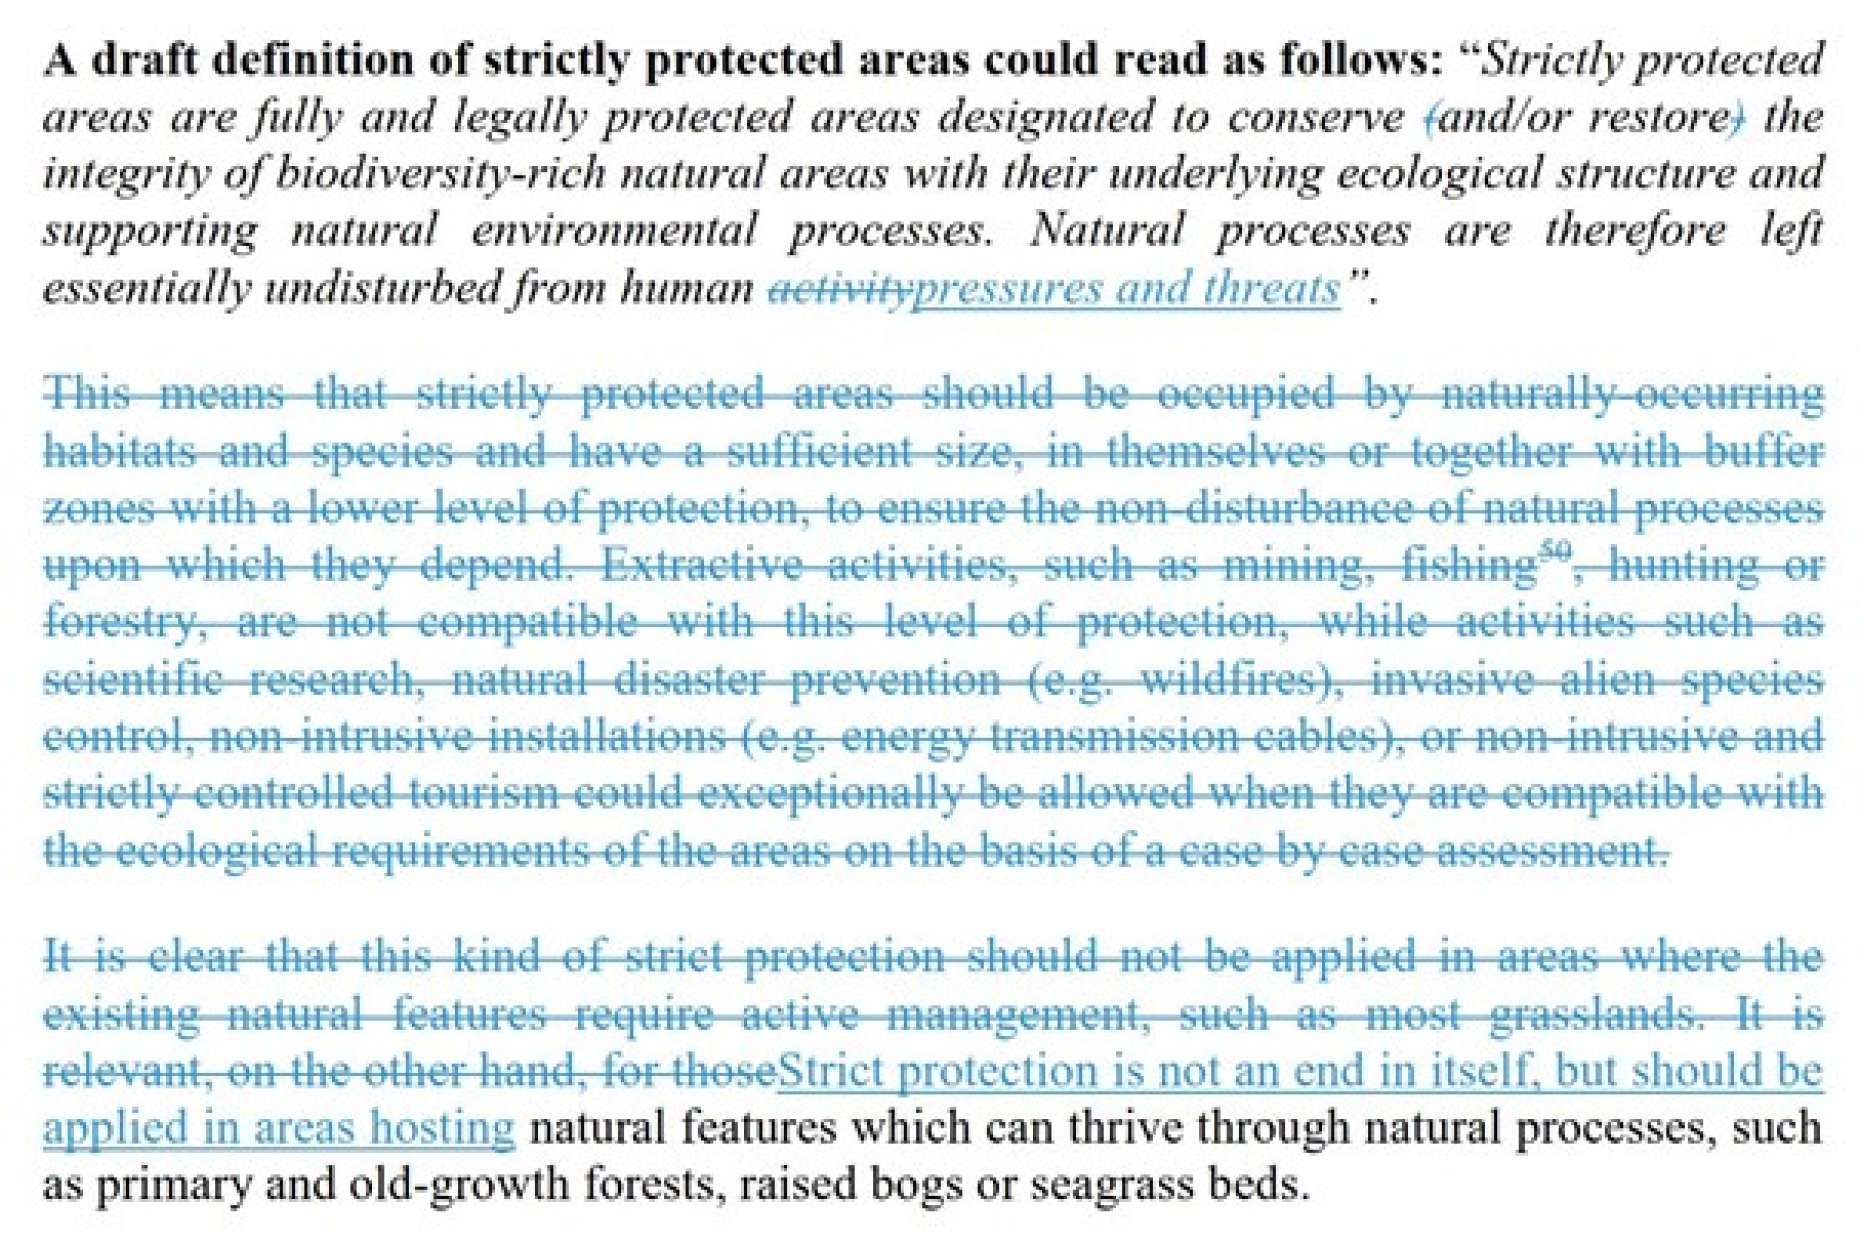 Auszug aus der überarbeiteten Version 2 vom Februar 2021 (DRAFT Technical Note On Criteria And Guidance For Protected Areas Designations)